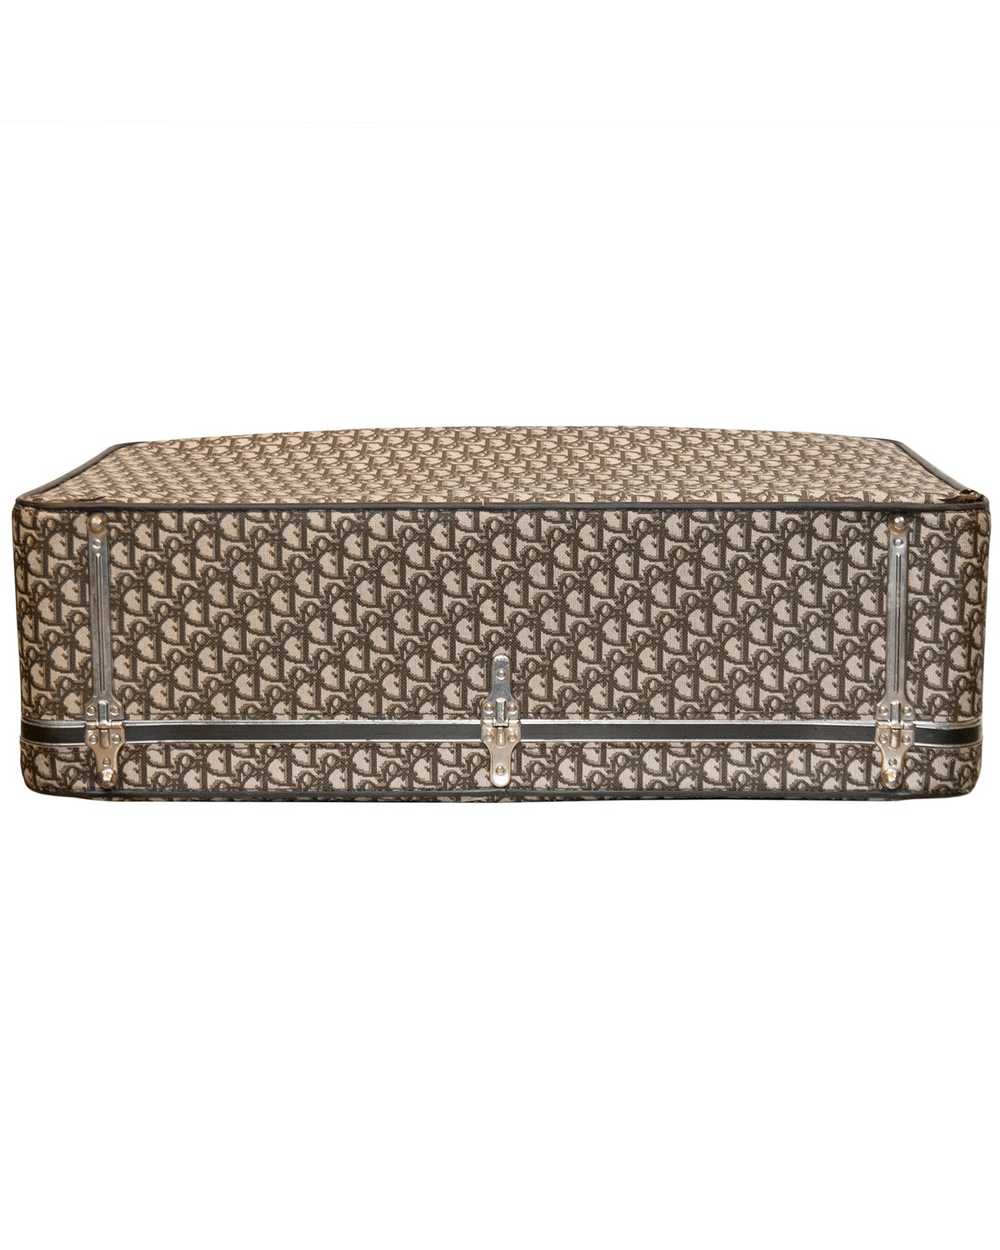 Christian Dior Large Monogram Suitcase - image 5